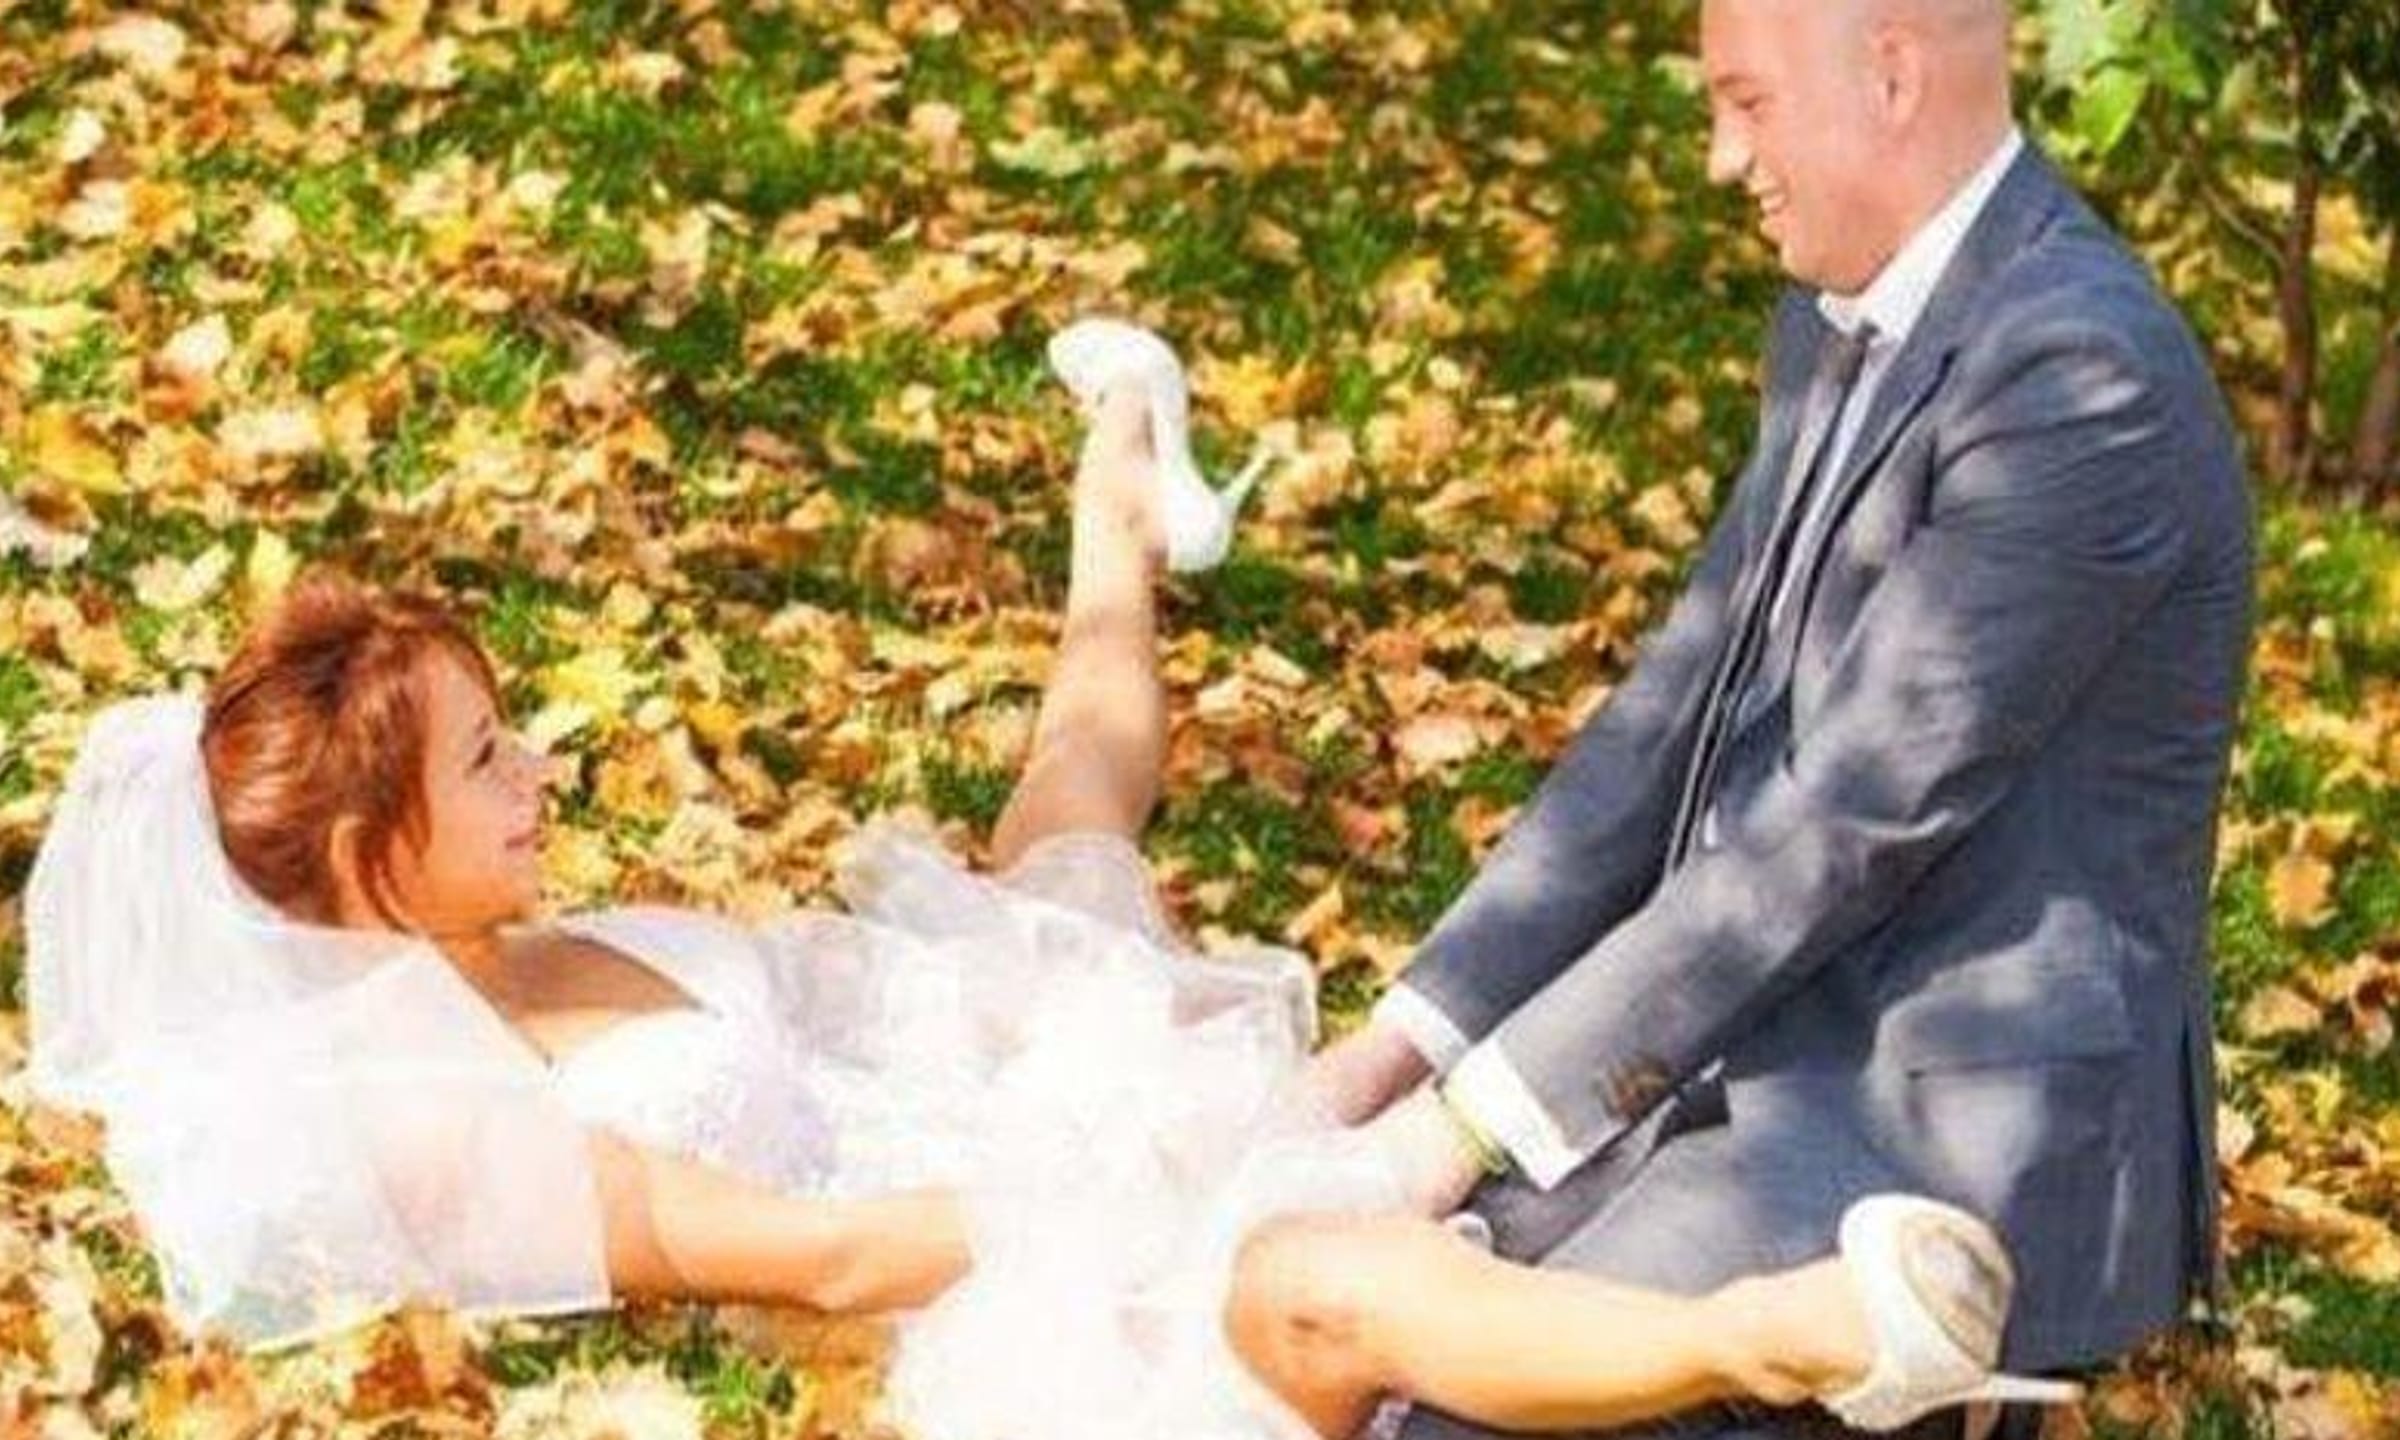 disko pubeleven add dirty wedding photos tumblr photo